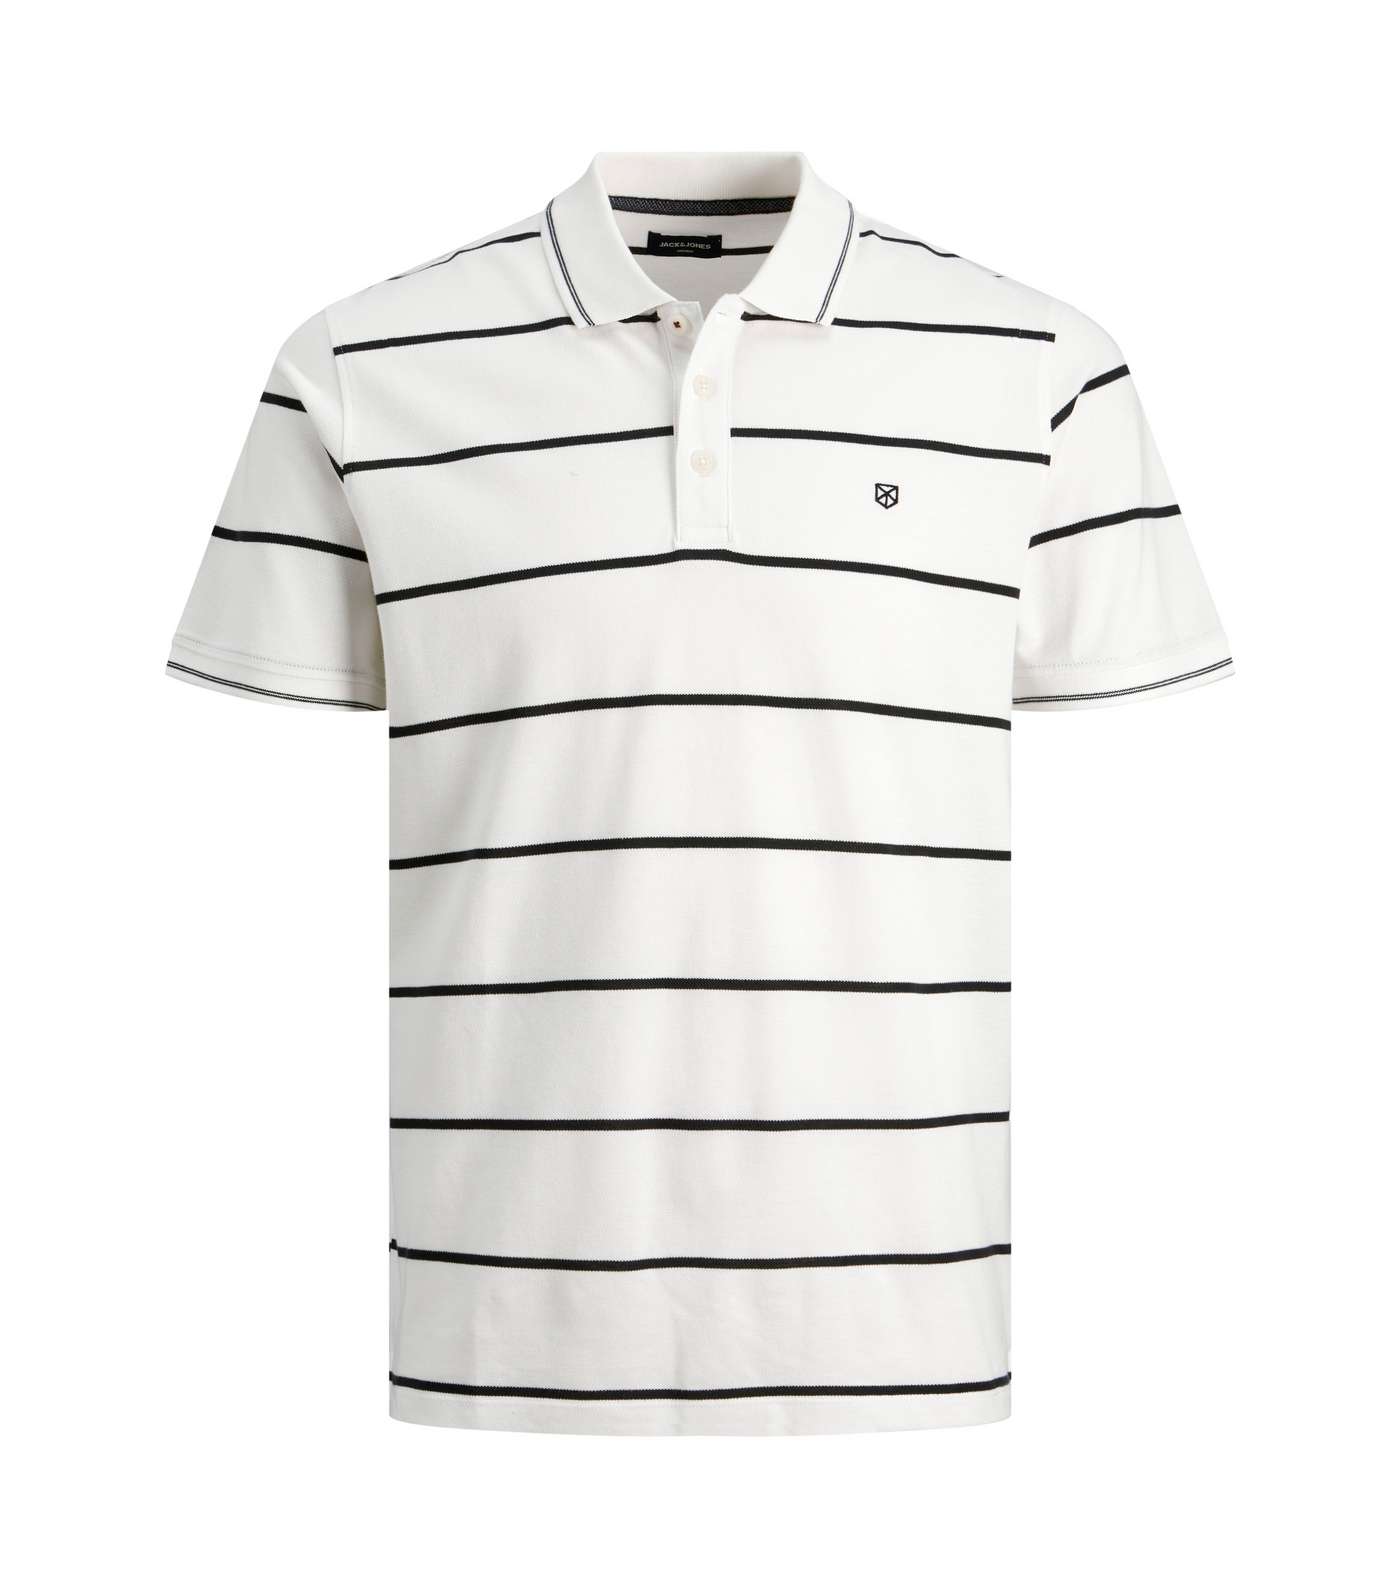 Jack & Jones White Stripe Polo Shirt Image 2